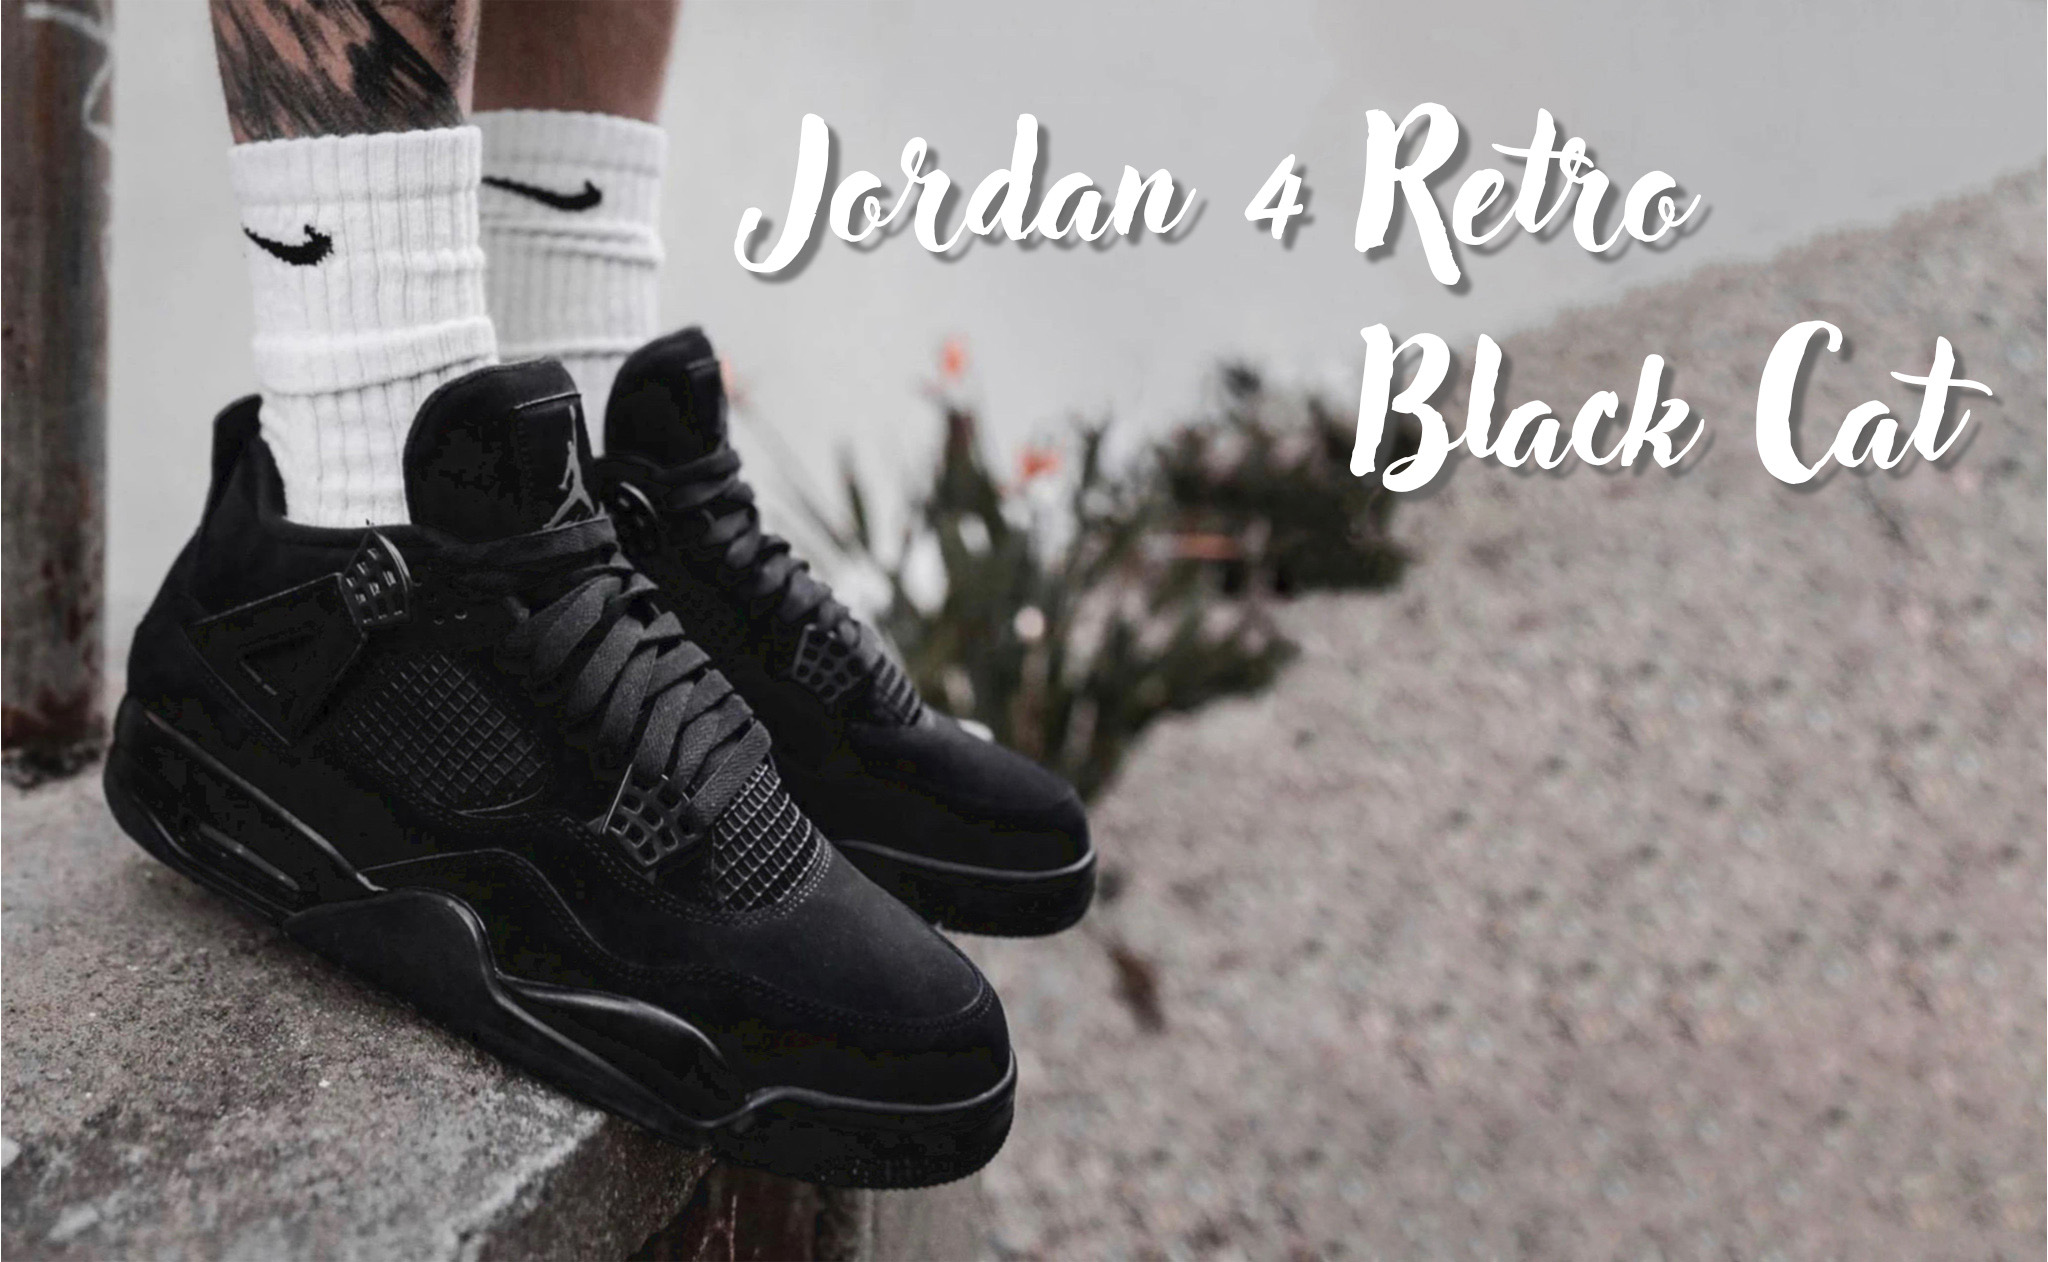 Jordan 4 Retro Black Cat